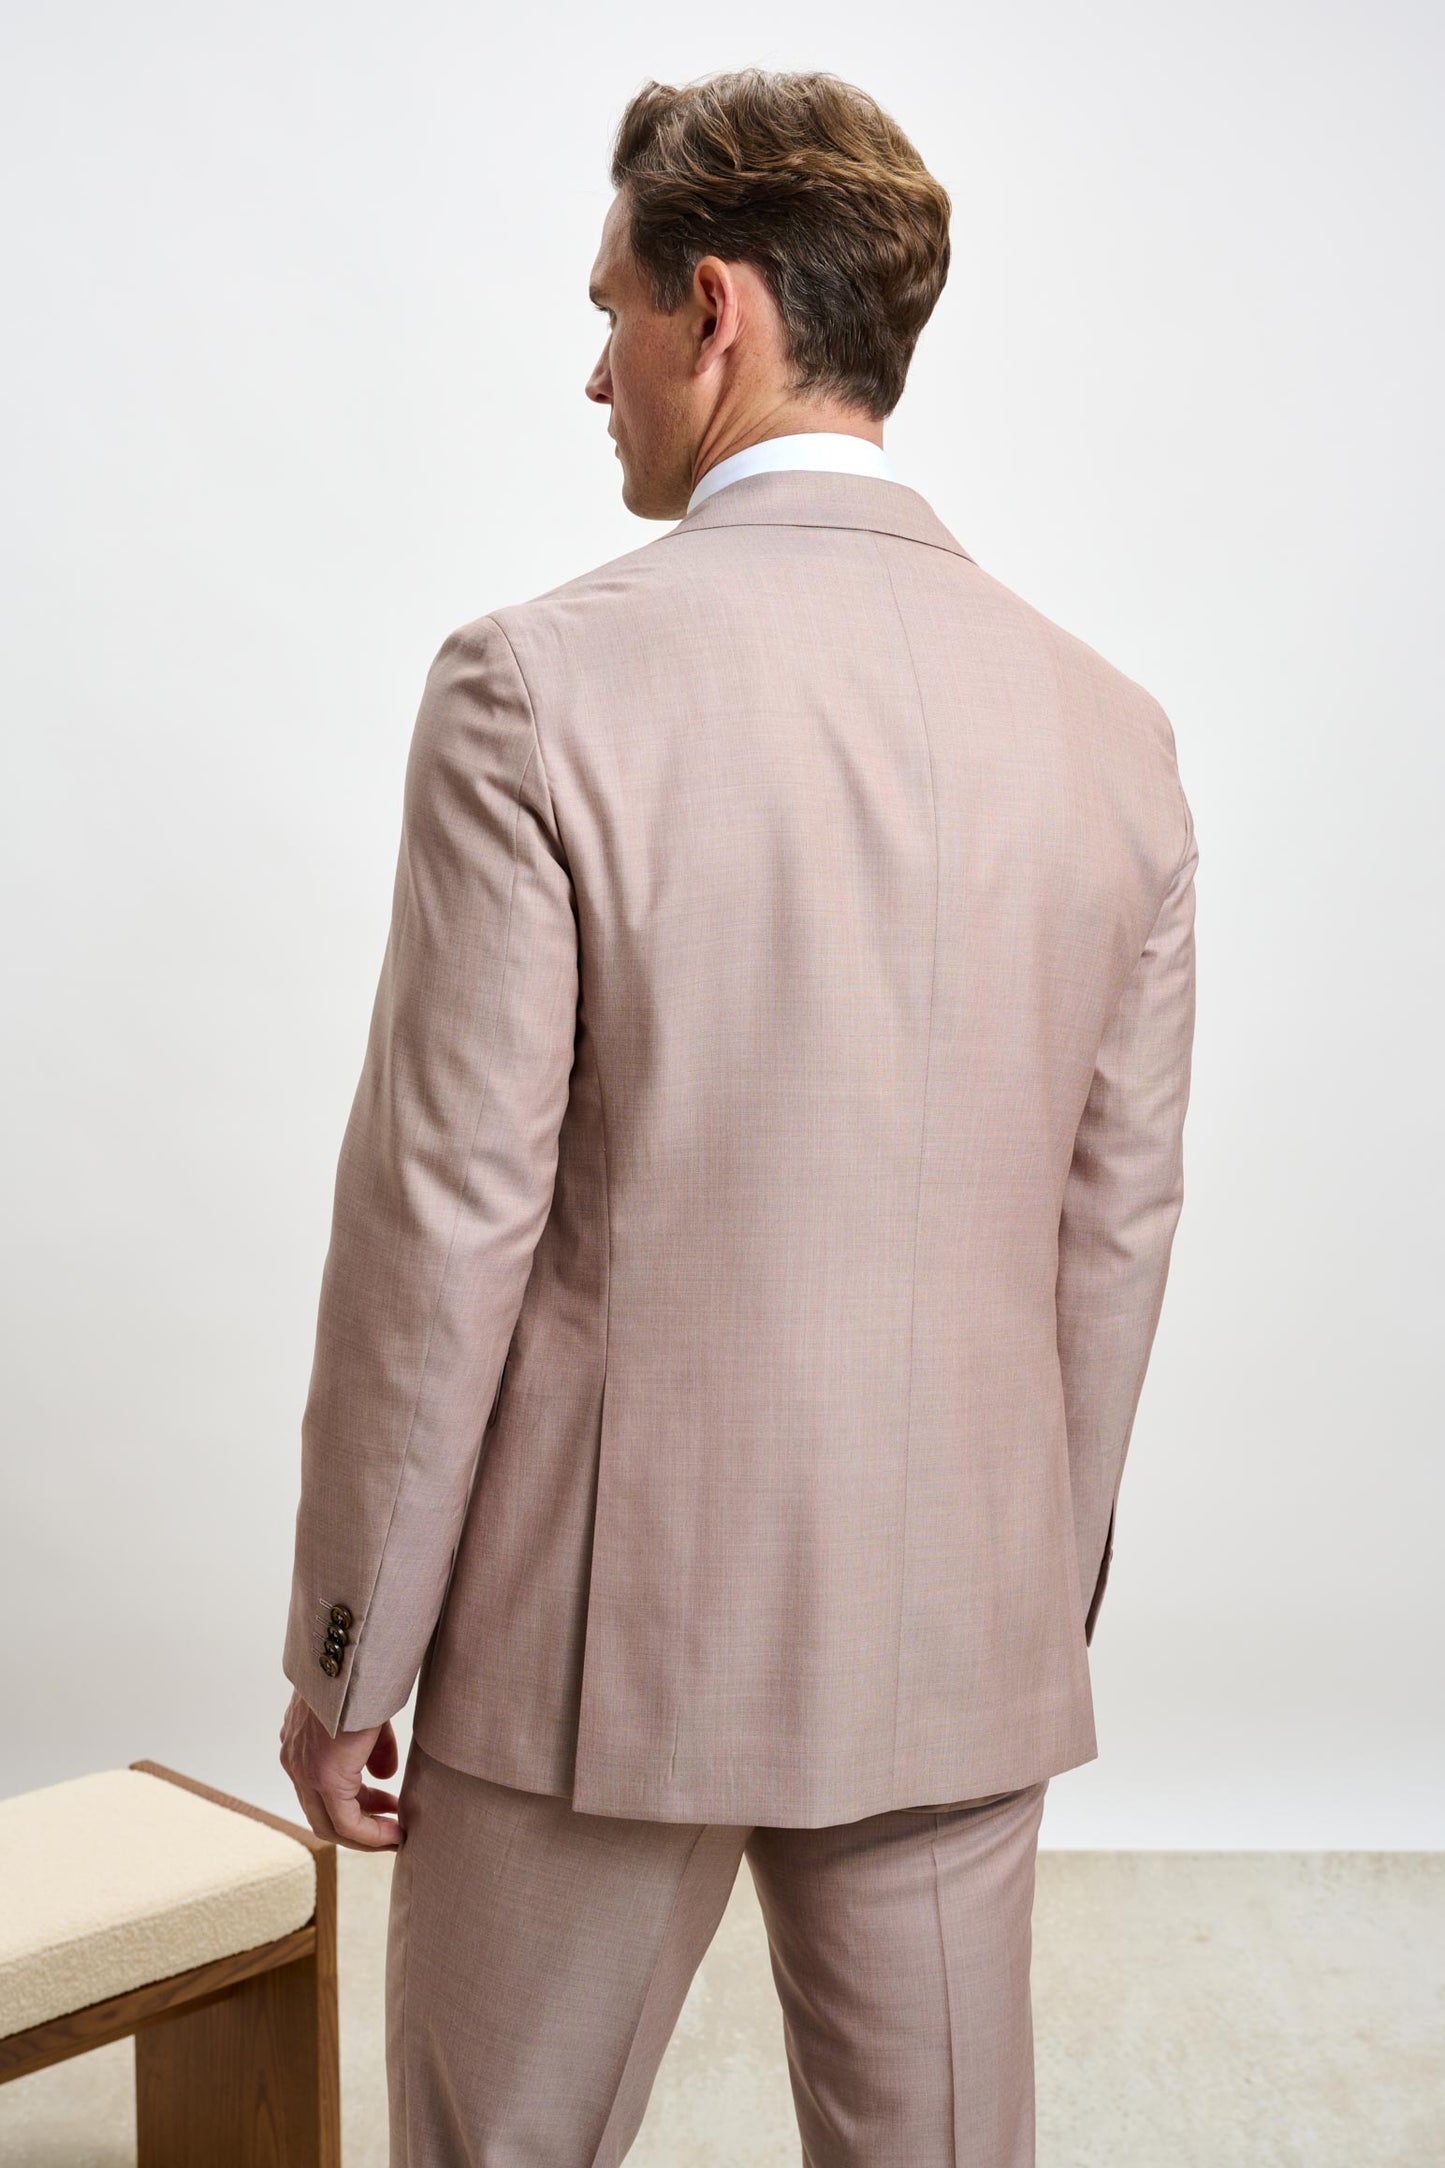 Kenton Suit Sleek Plain Beige